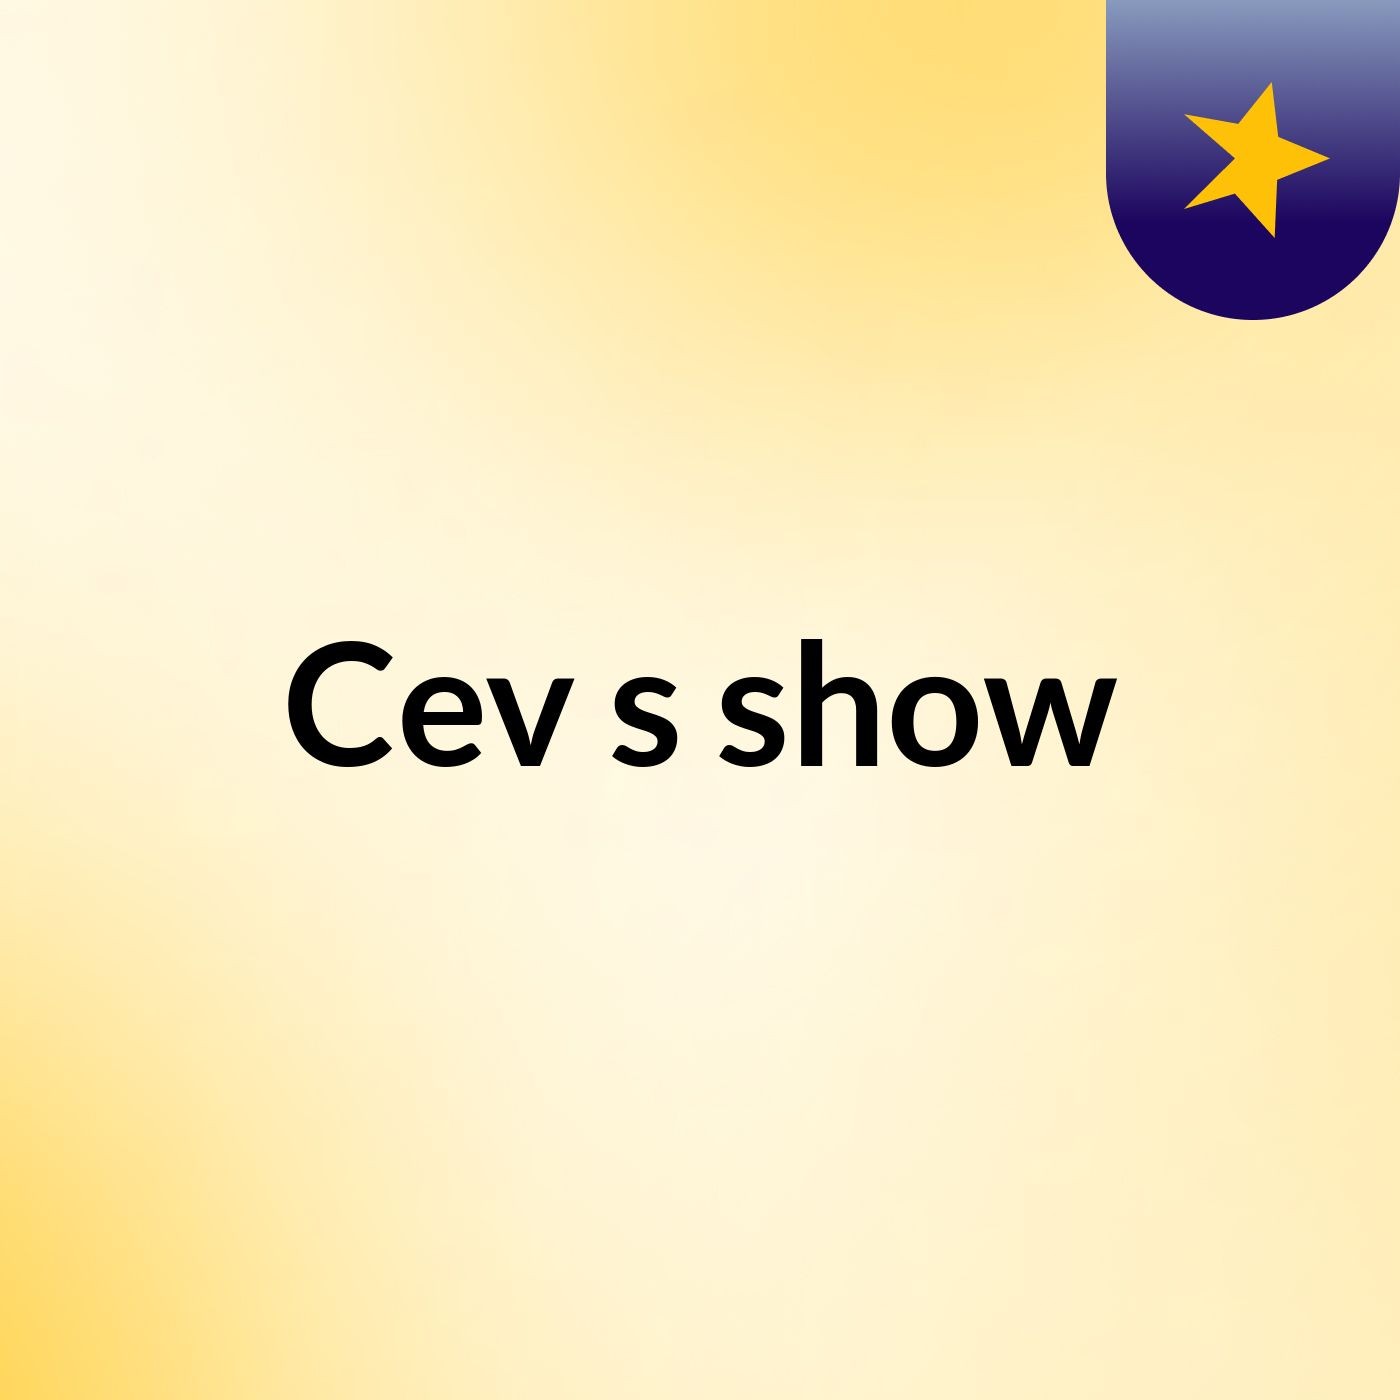 Cev's show